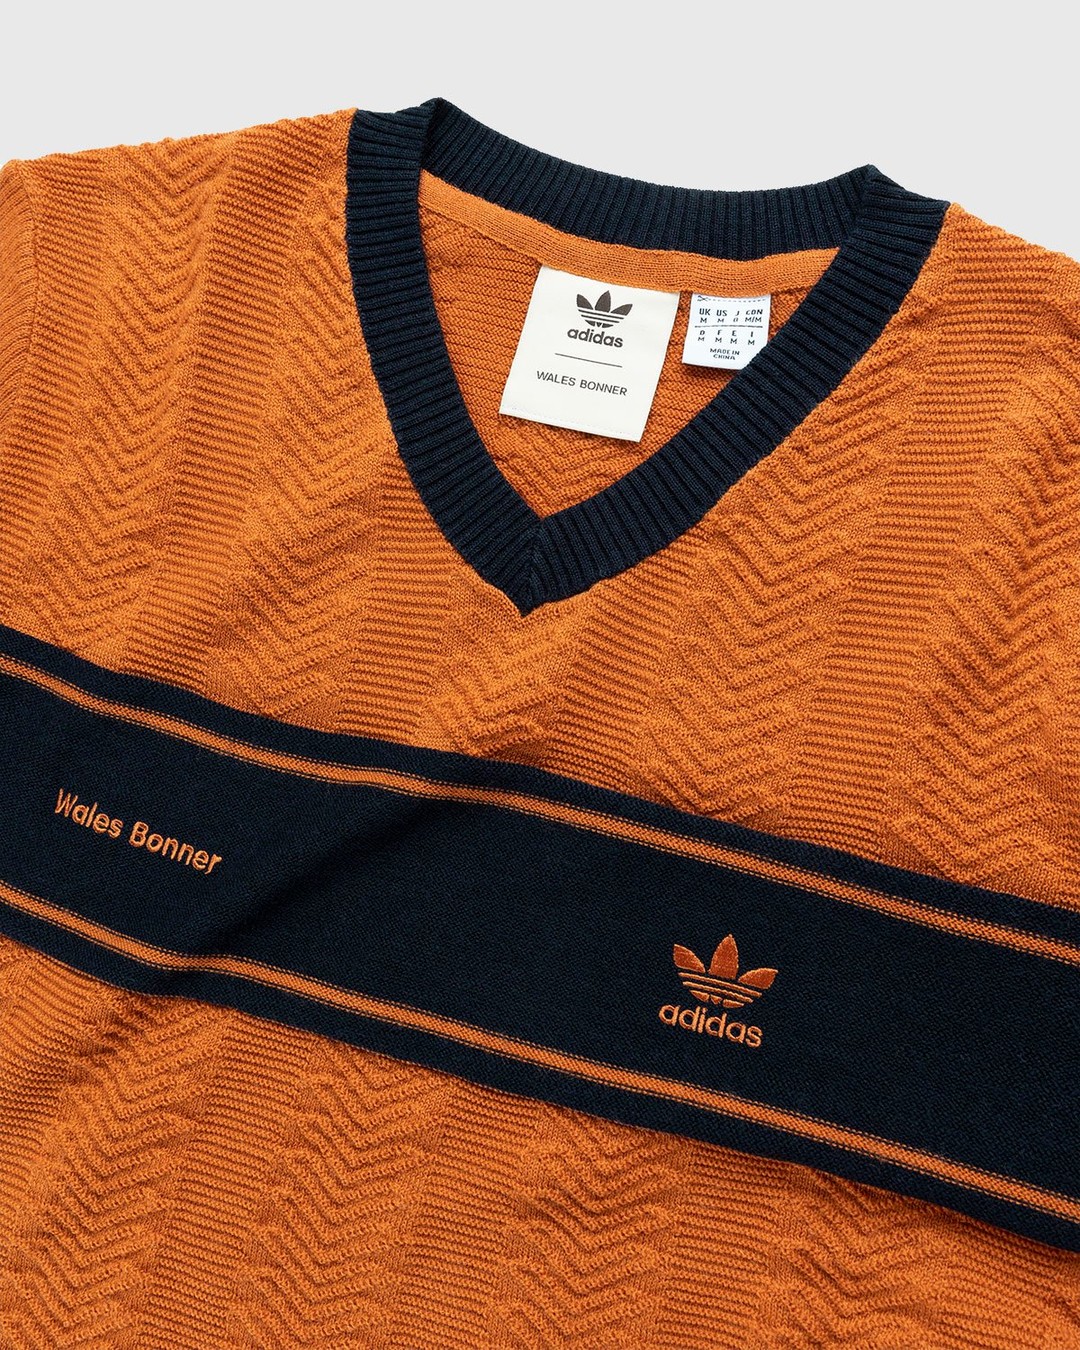 Adidas x Wales Bonner – Knit Longsleeve - V-Necks Knitwear - Orange - Image 3